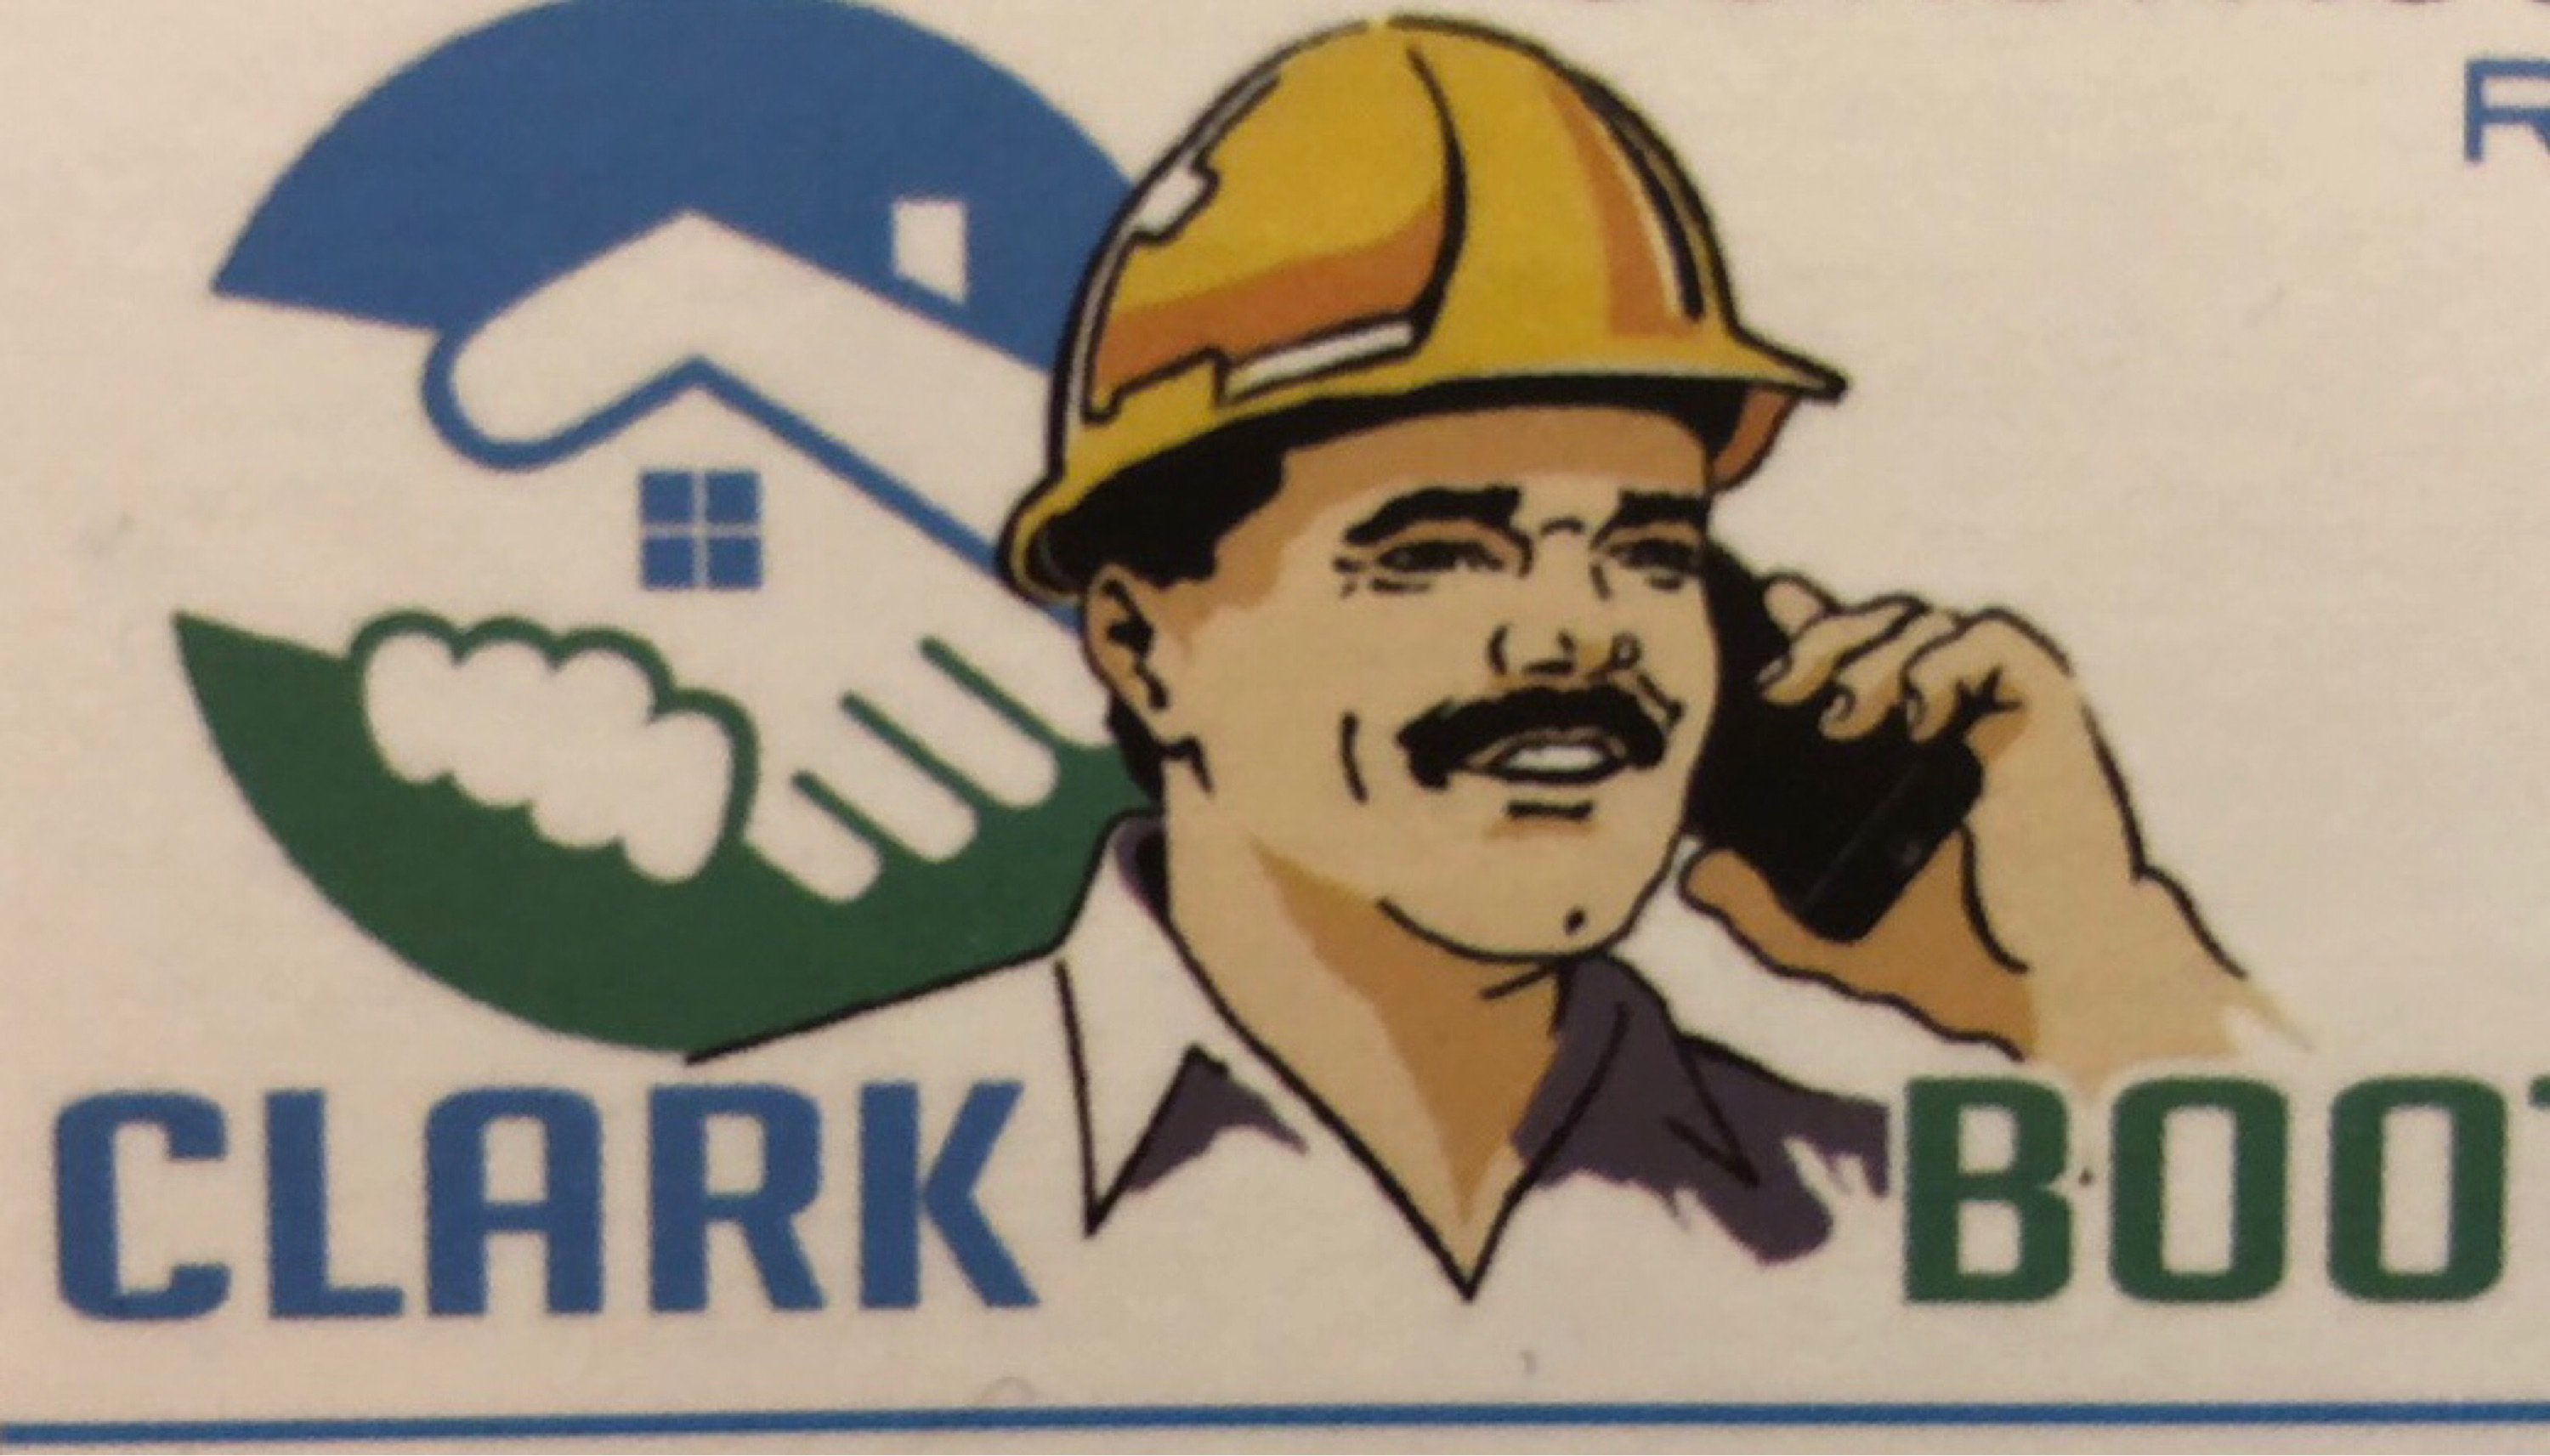 Clark Booth Property Inspector Logo